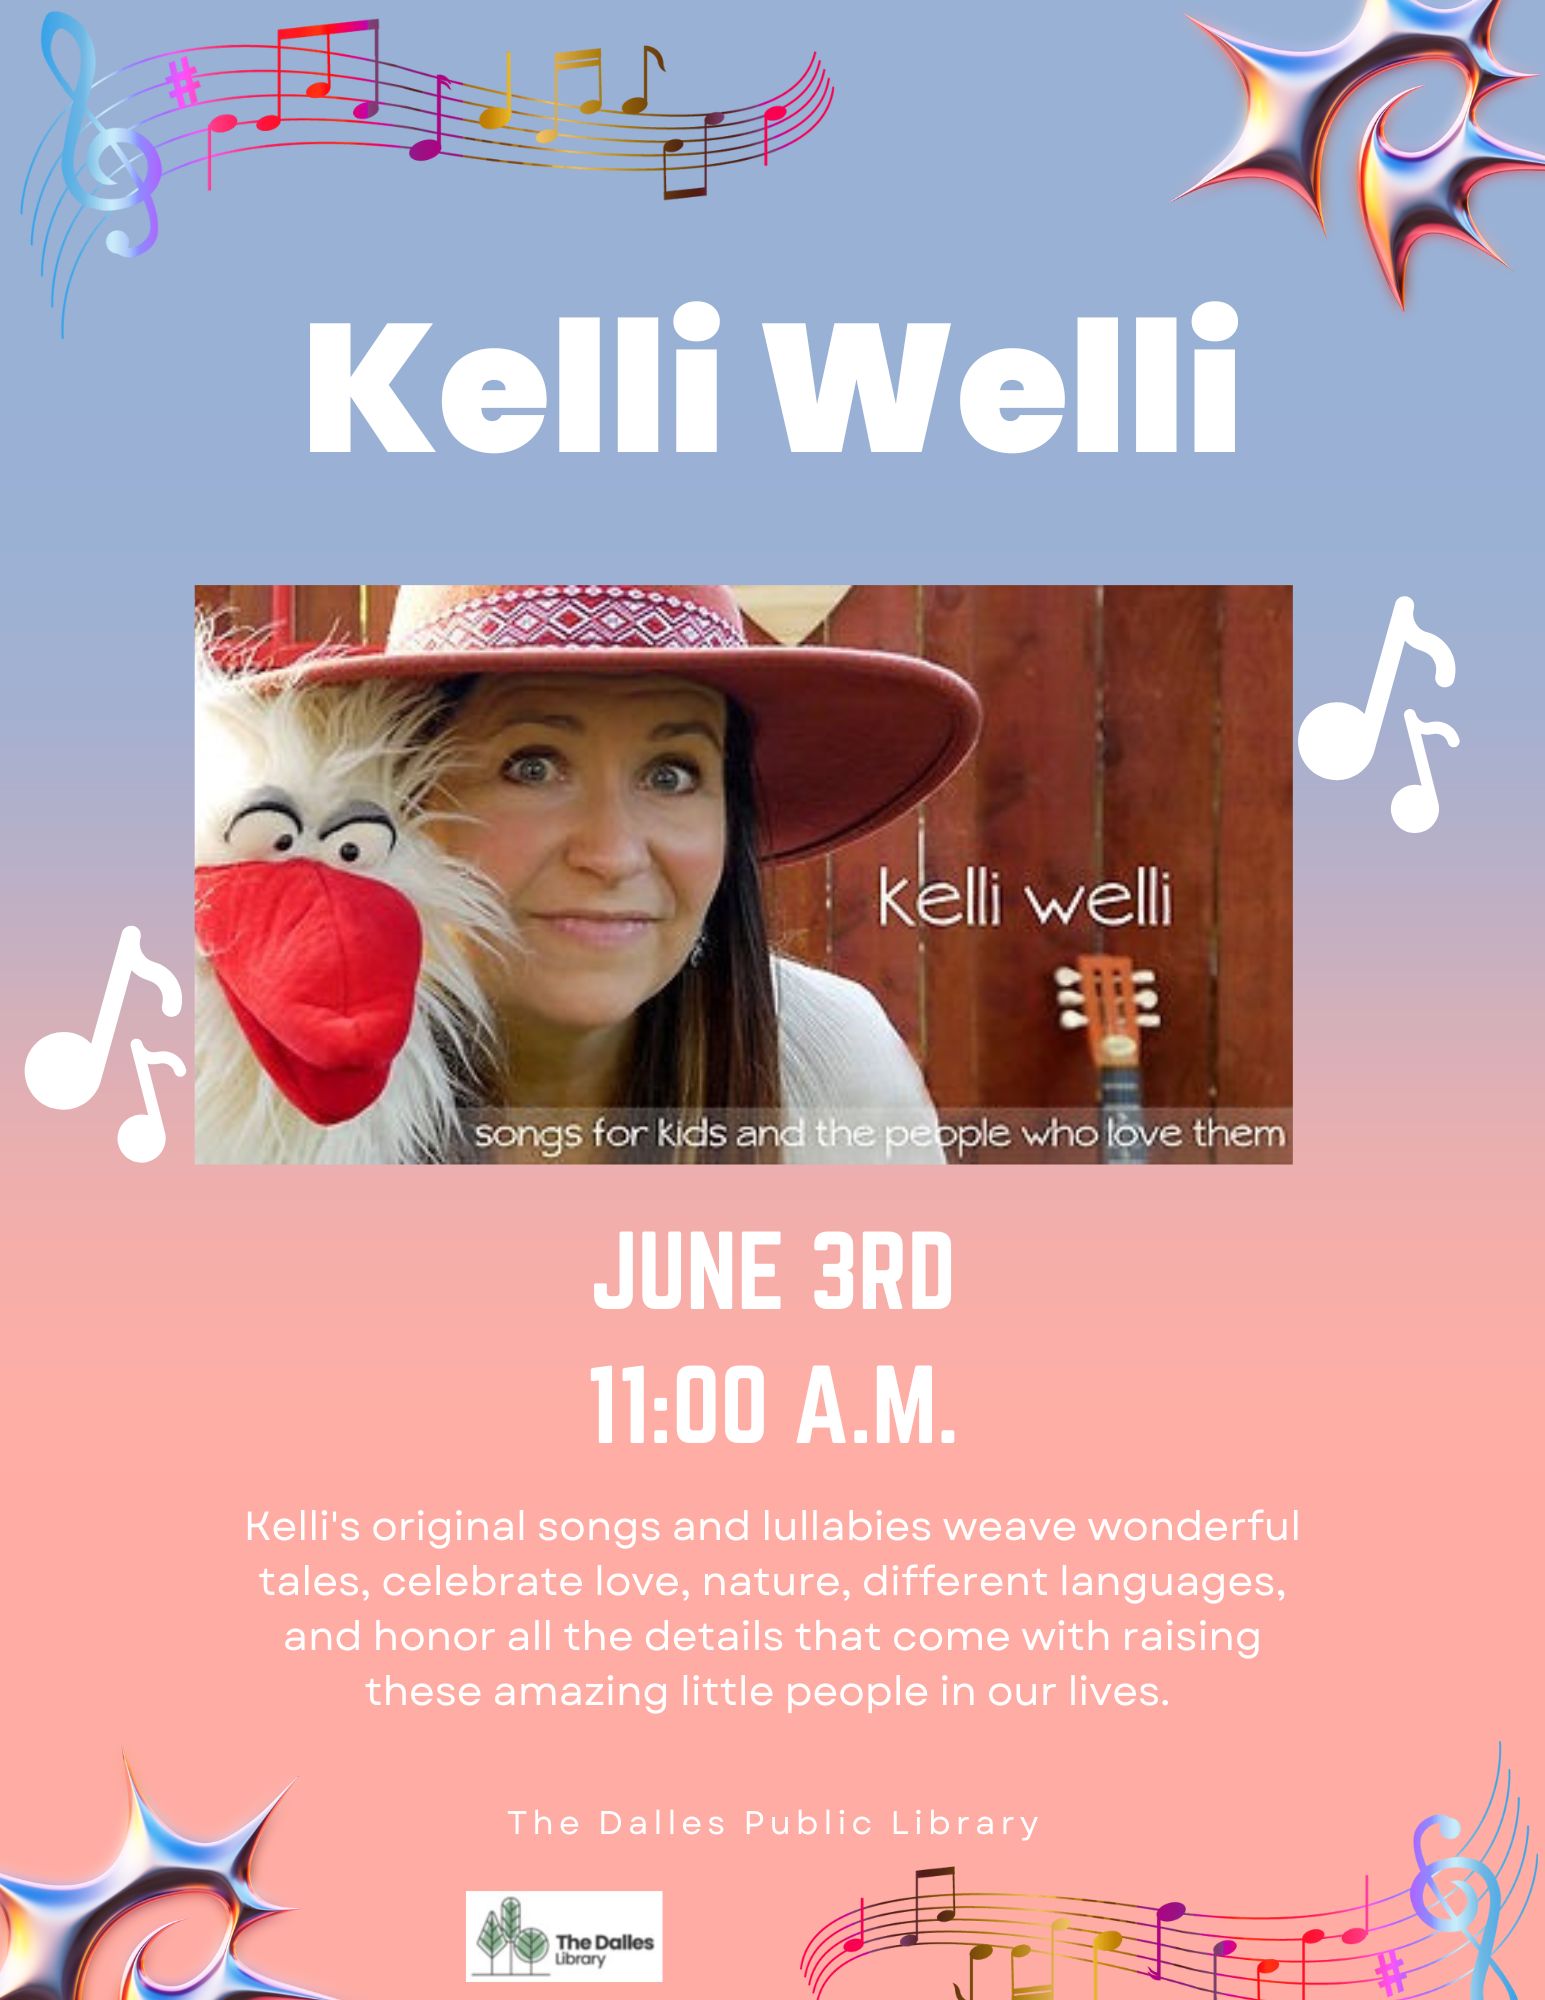 Kelli Welli performing at 11:00